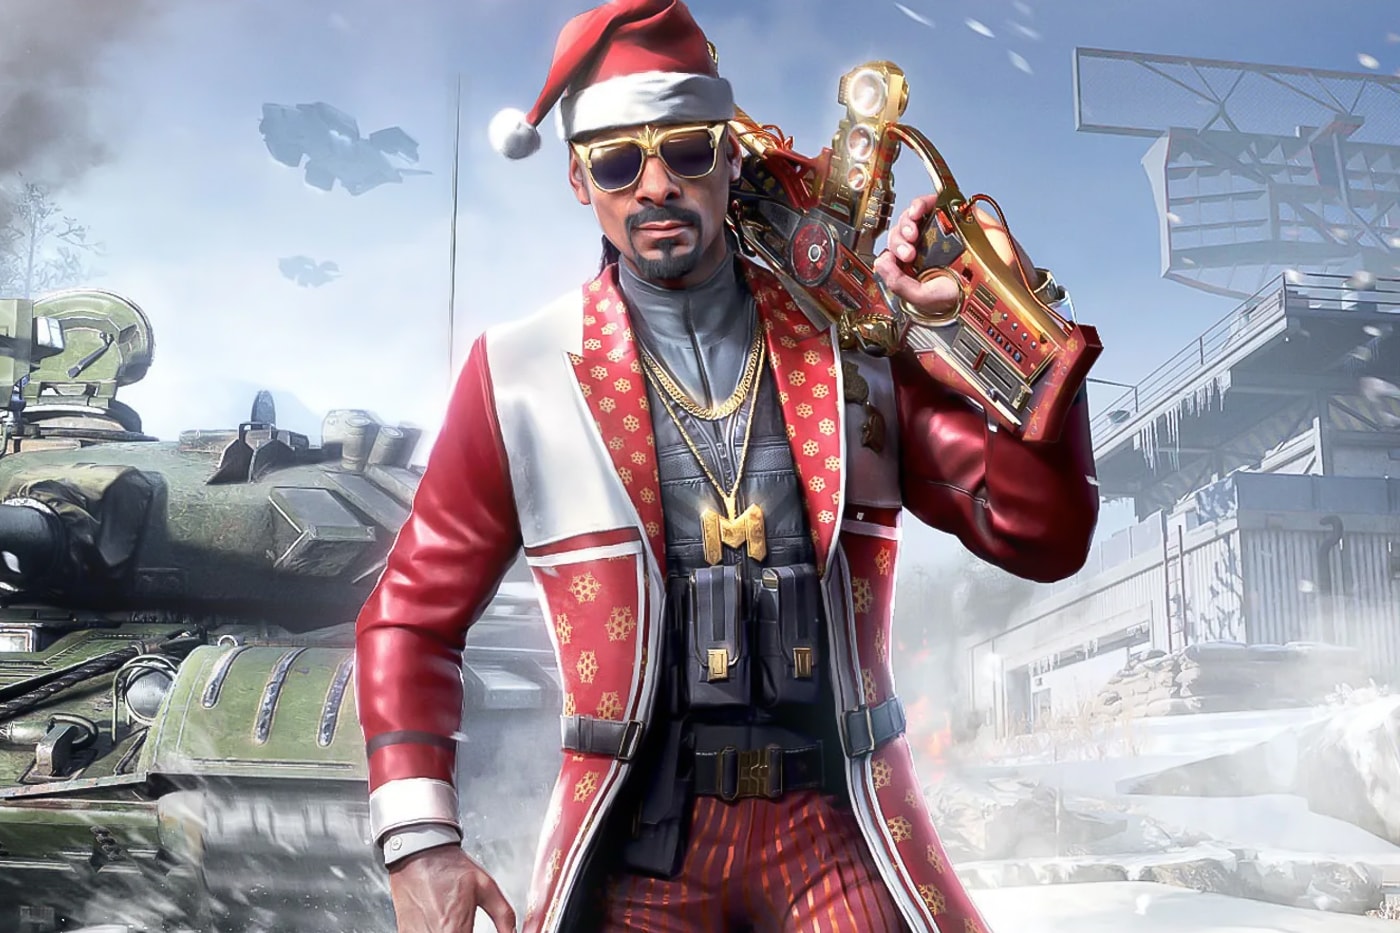 Snoop Dogg Santa Call of Duty Mobile COD appearance skin ultimate frontier season 11 news info